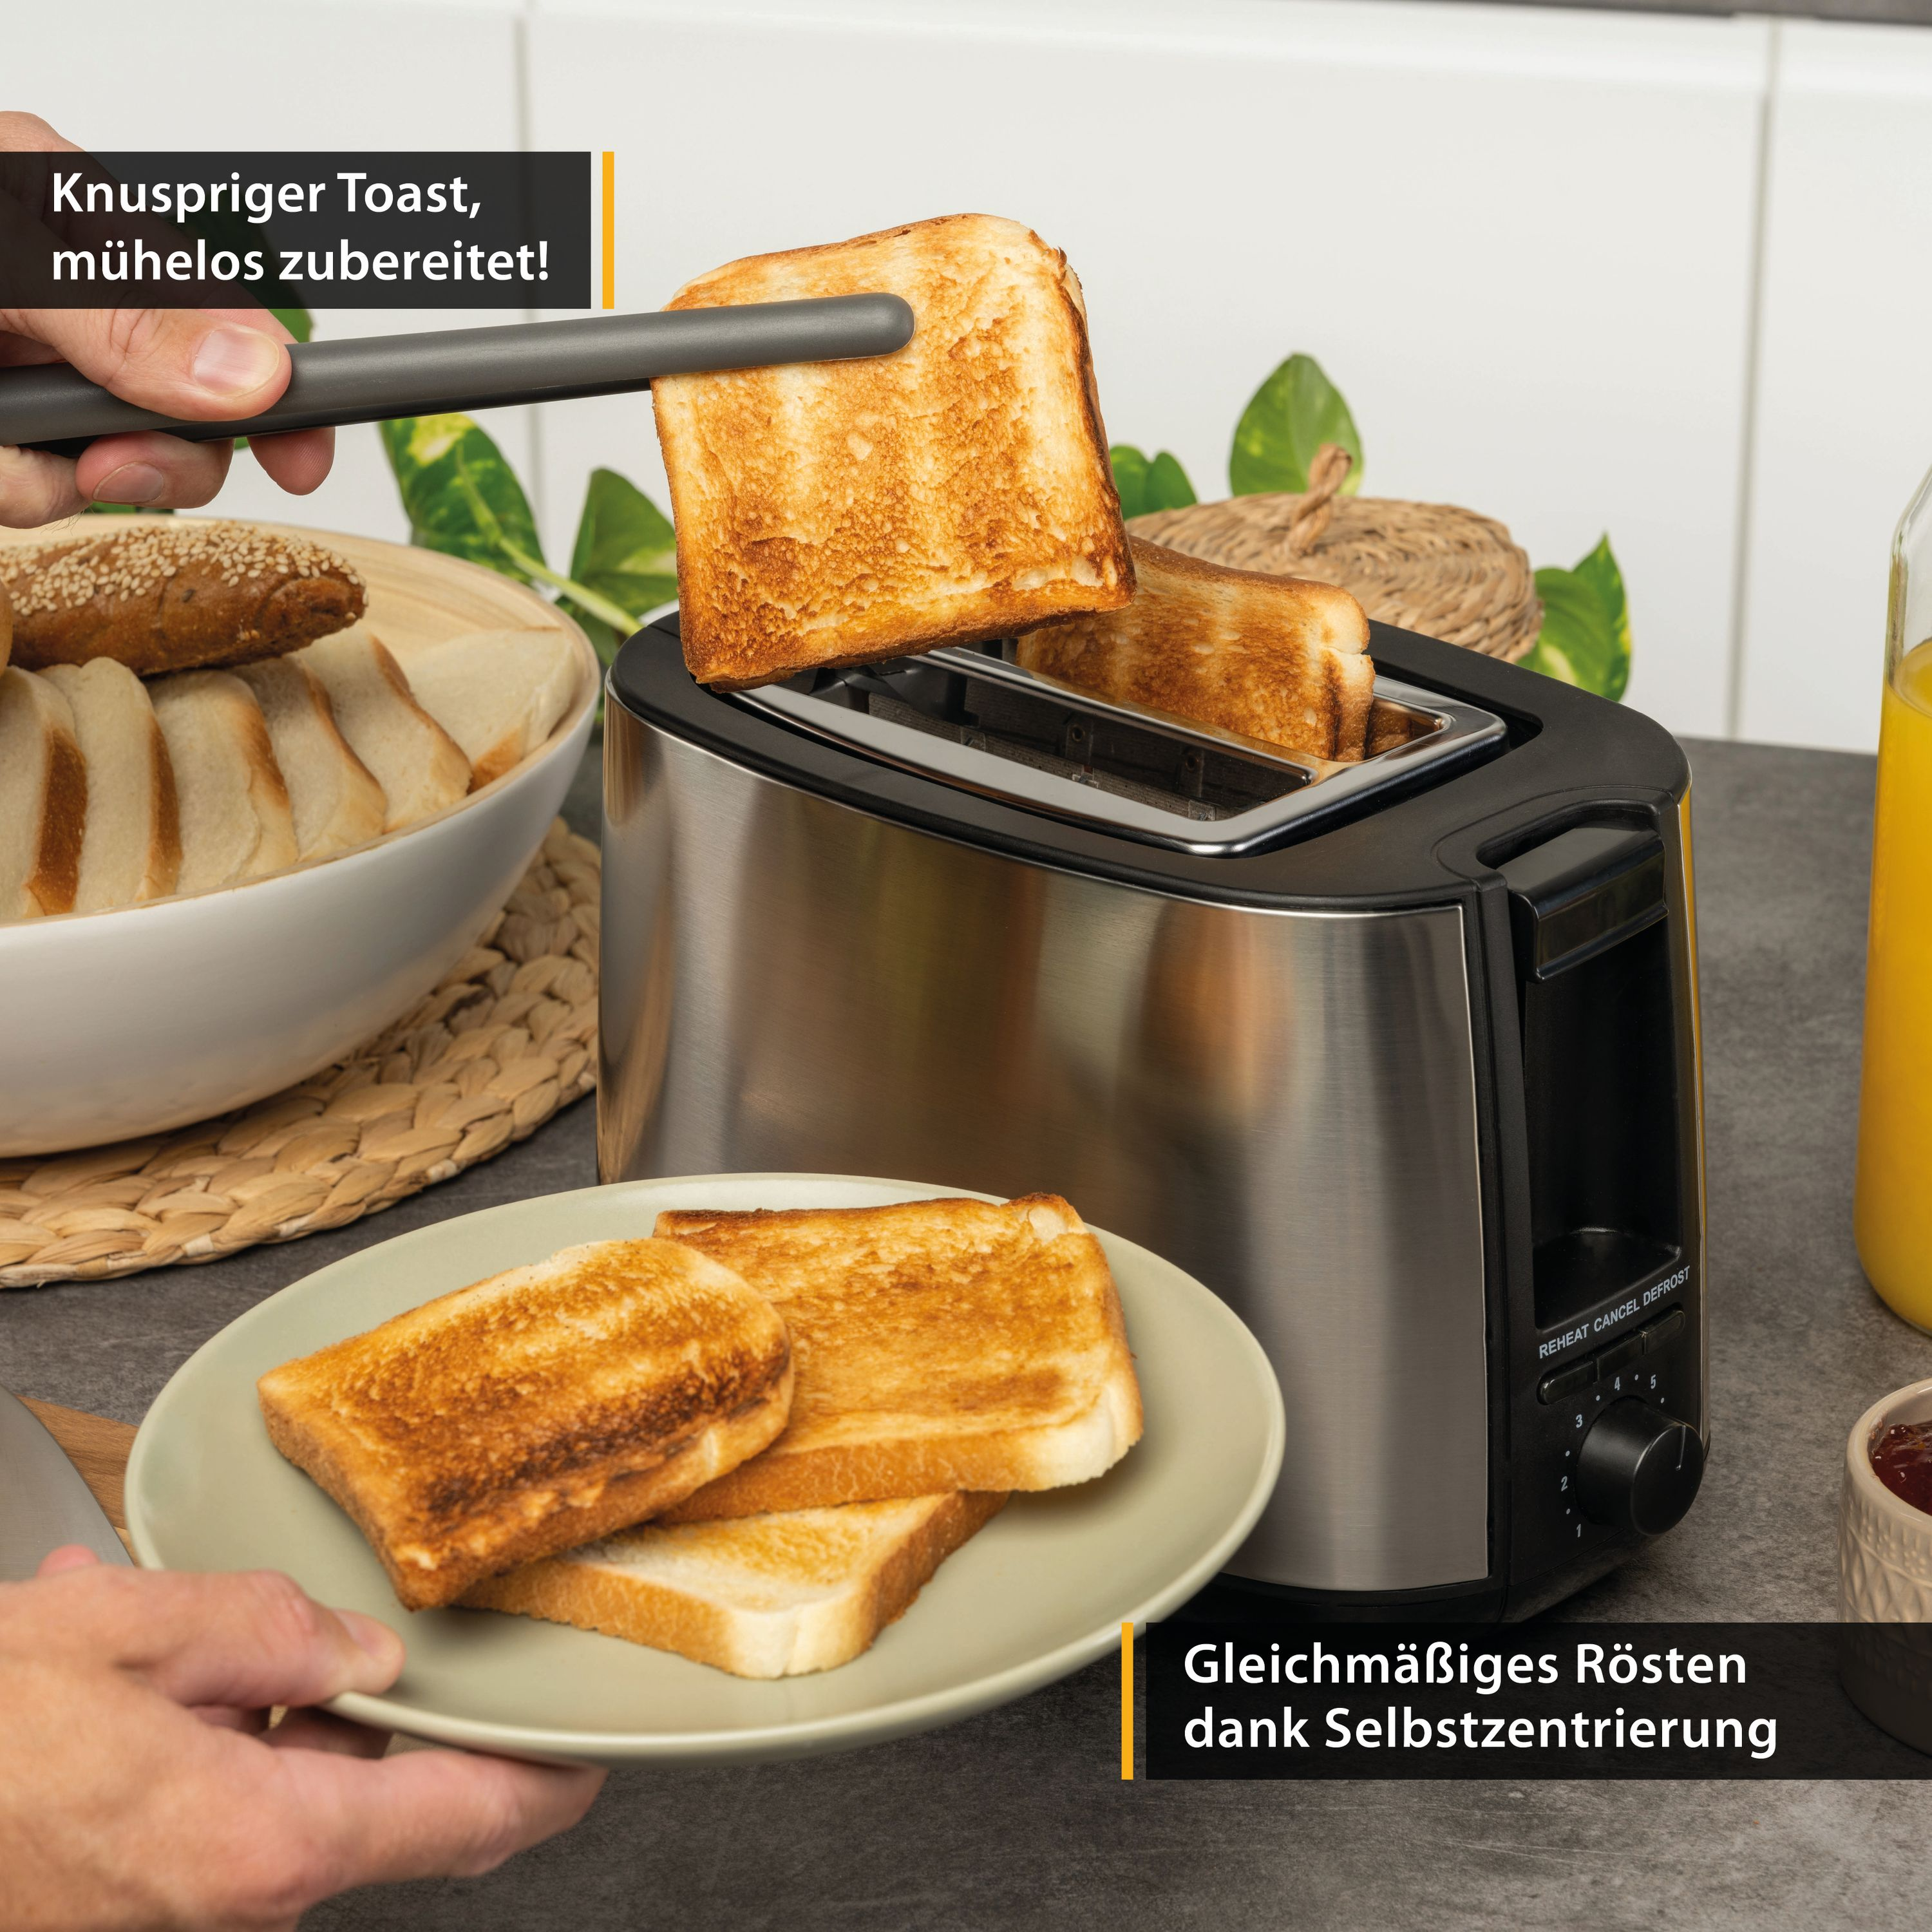 TZS 50 Schlitze: FA-5369-4 FIRST AUSTRIA Watt, 2) Toaster (750